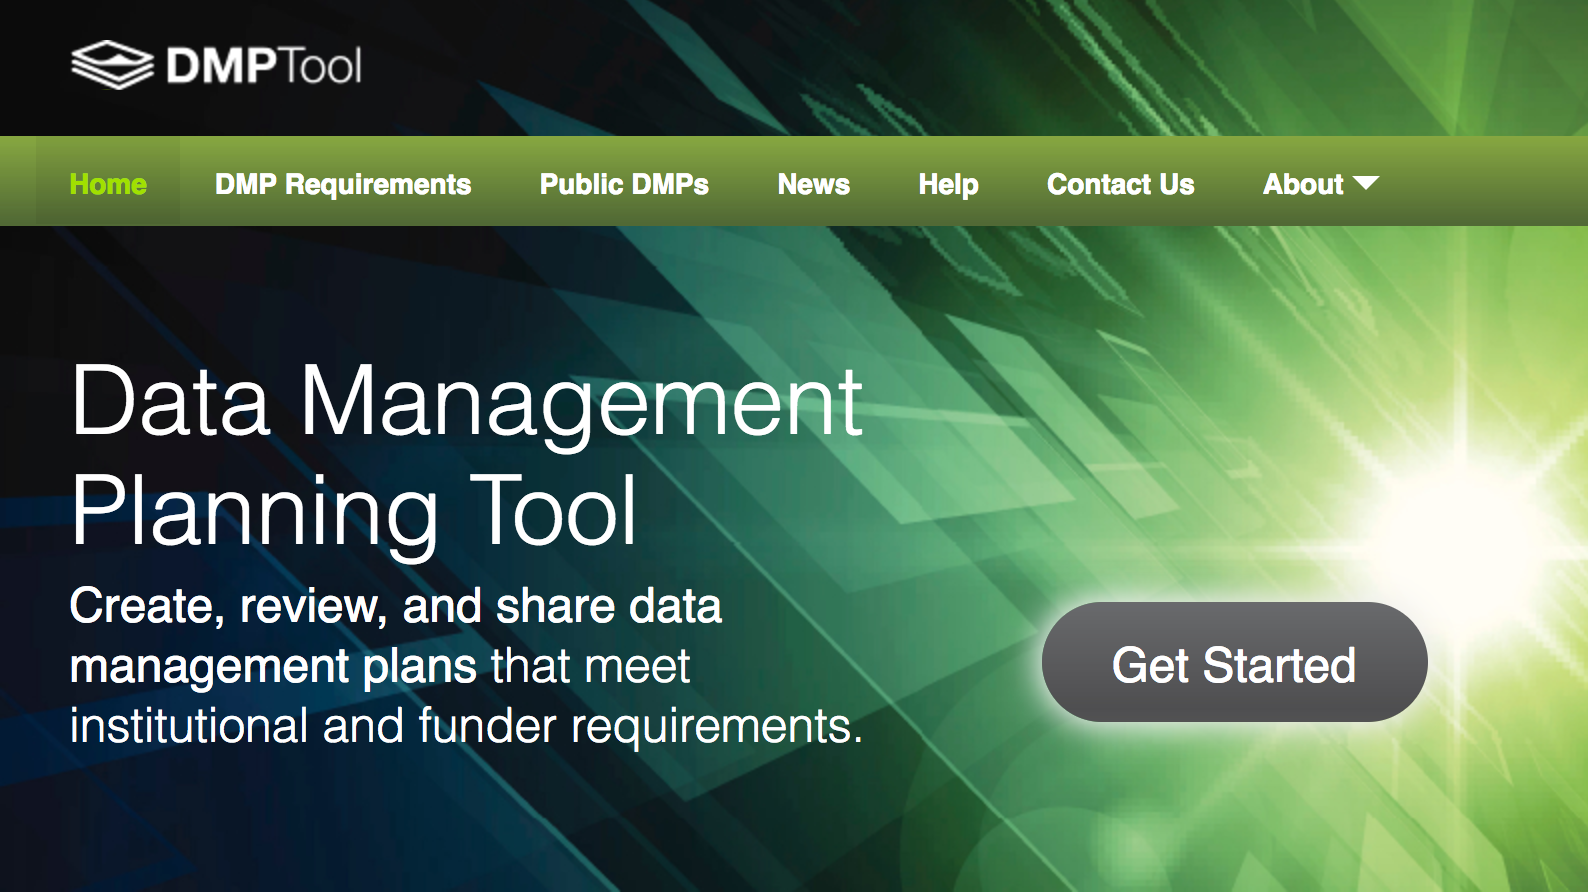 Image 1: Data Management Planning Tool (dmptool.org) homepage